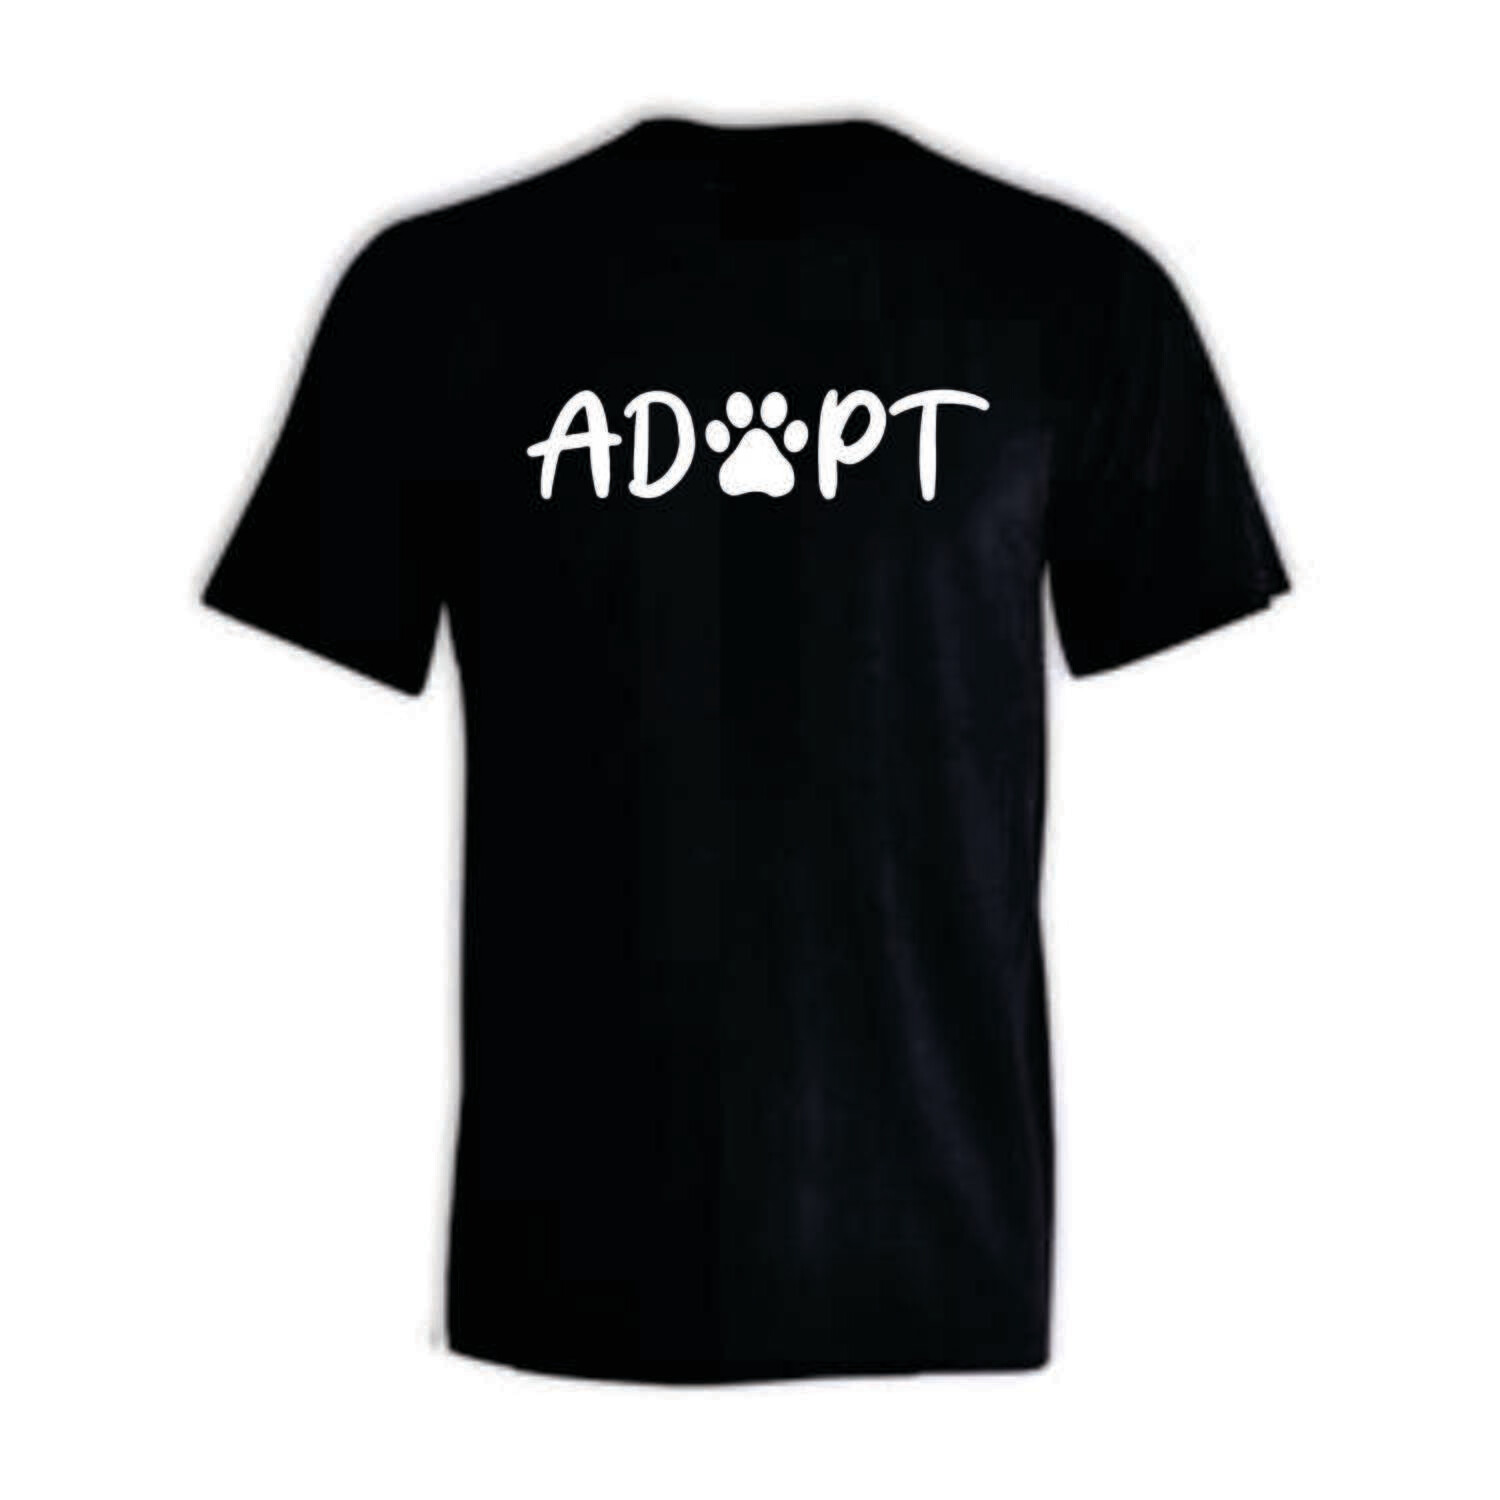 Adopt T-shirt